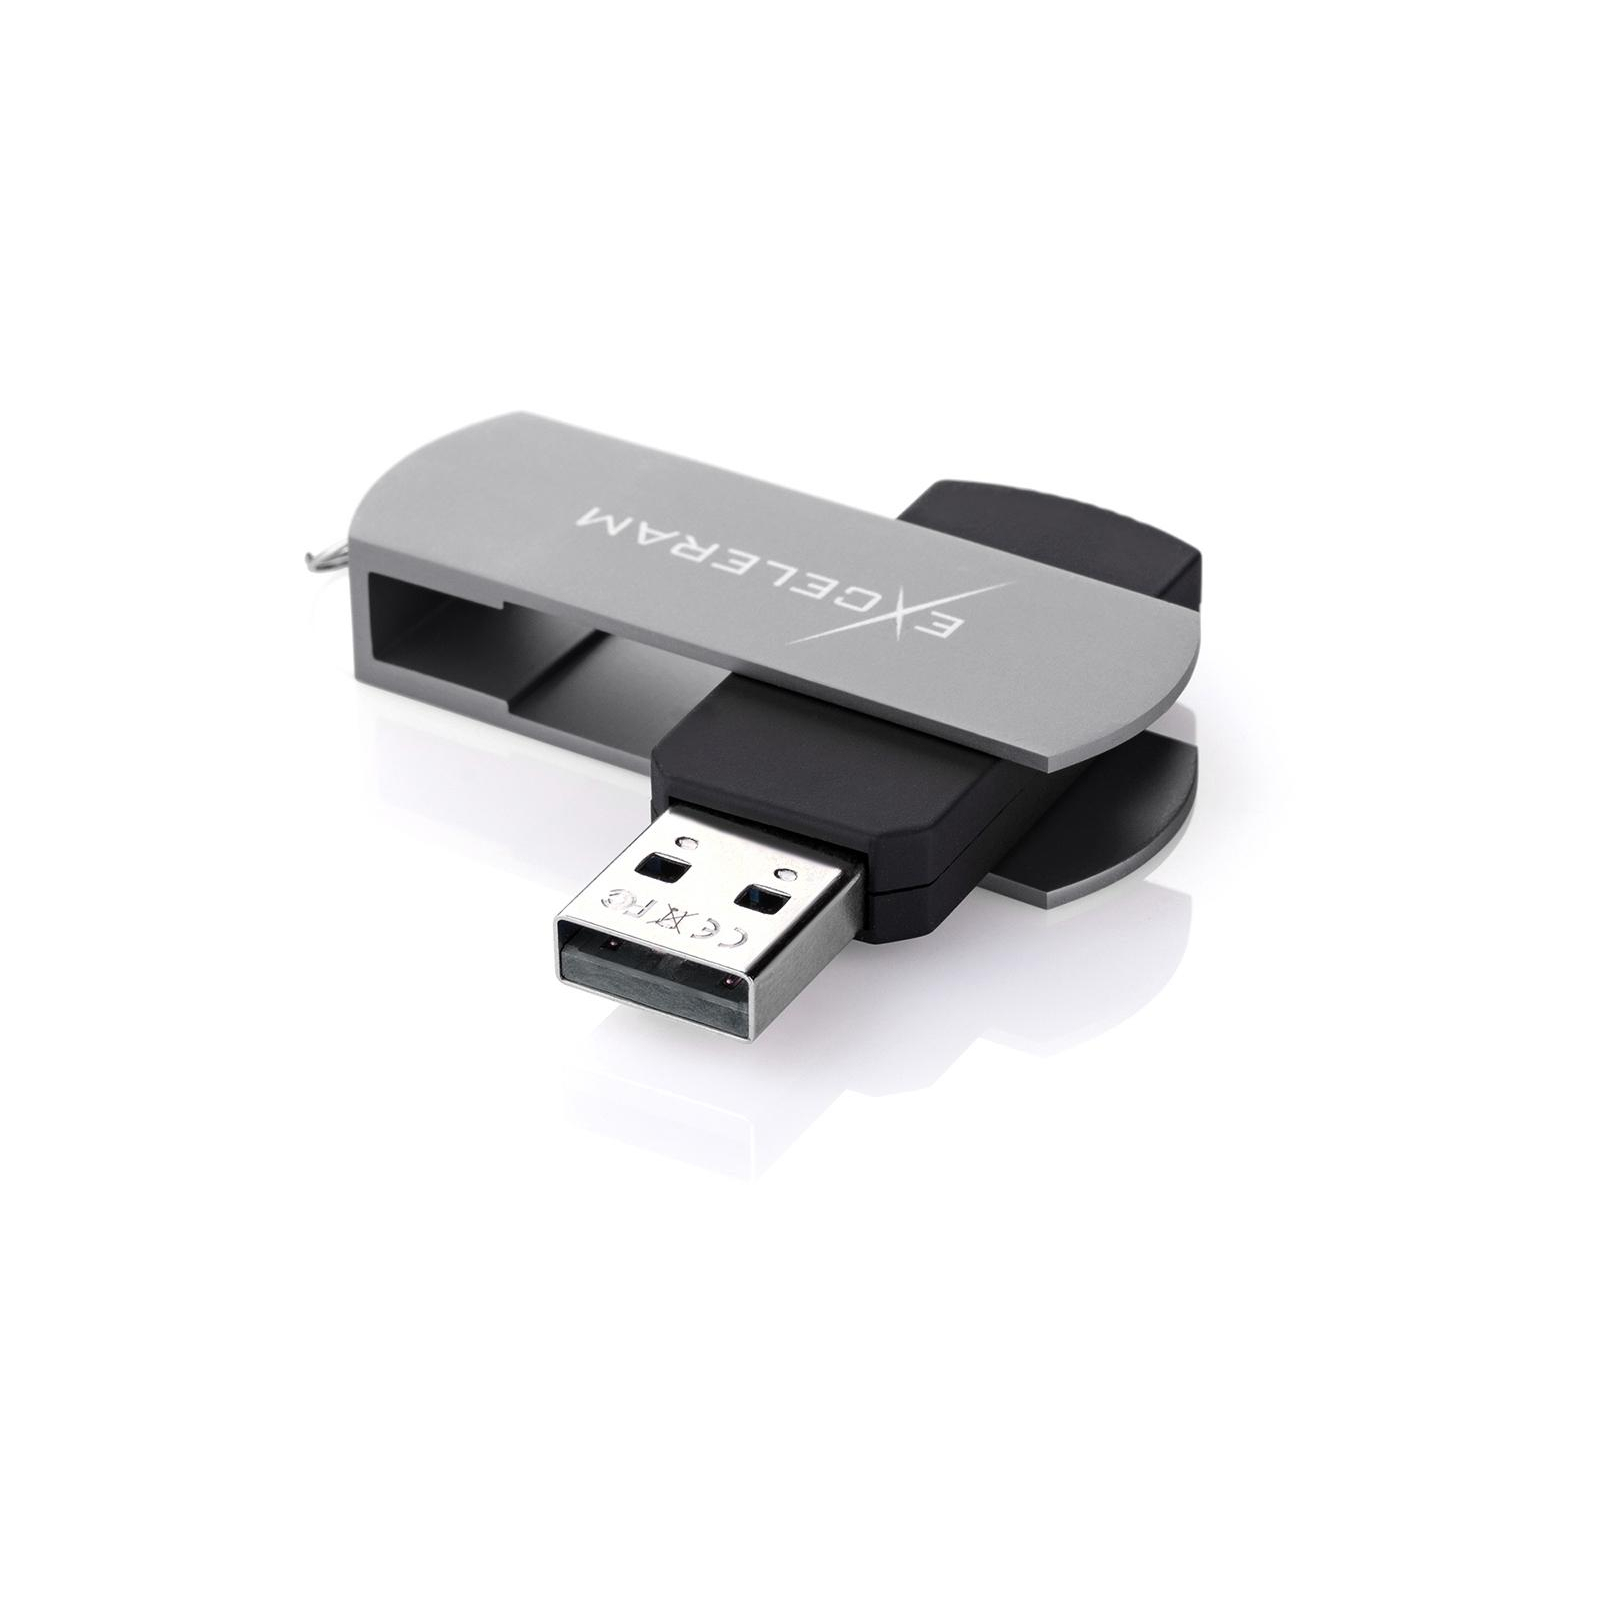 USB флеш накопитель eXceleram 16GB P2 Series Rose/Black USB 2.0 (EXP2U2ROB16) изображение 2